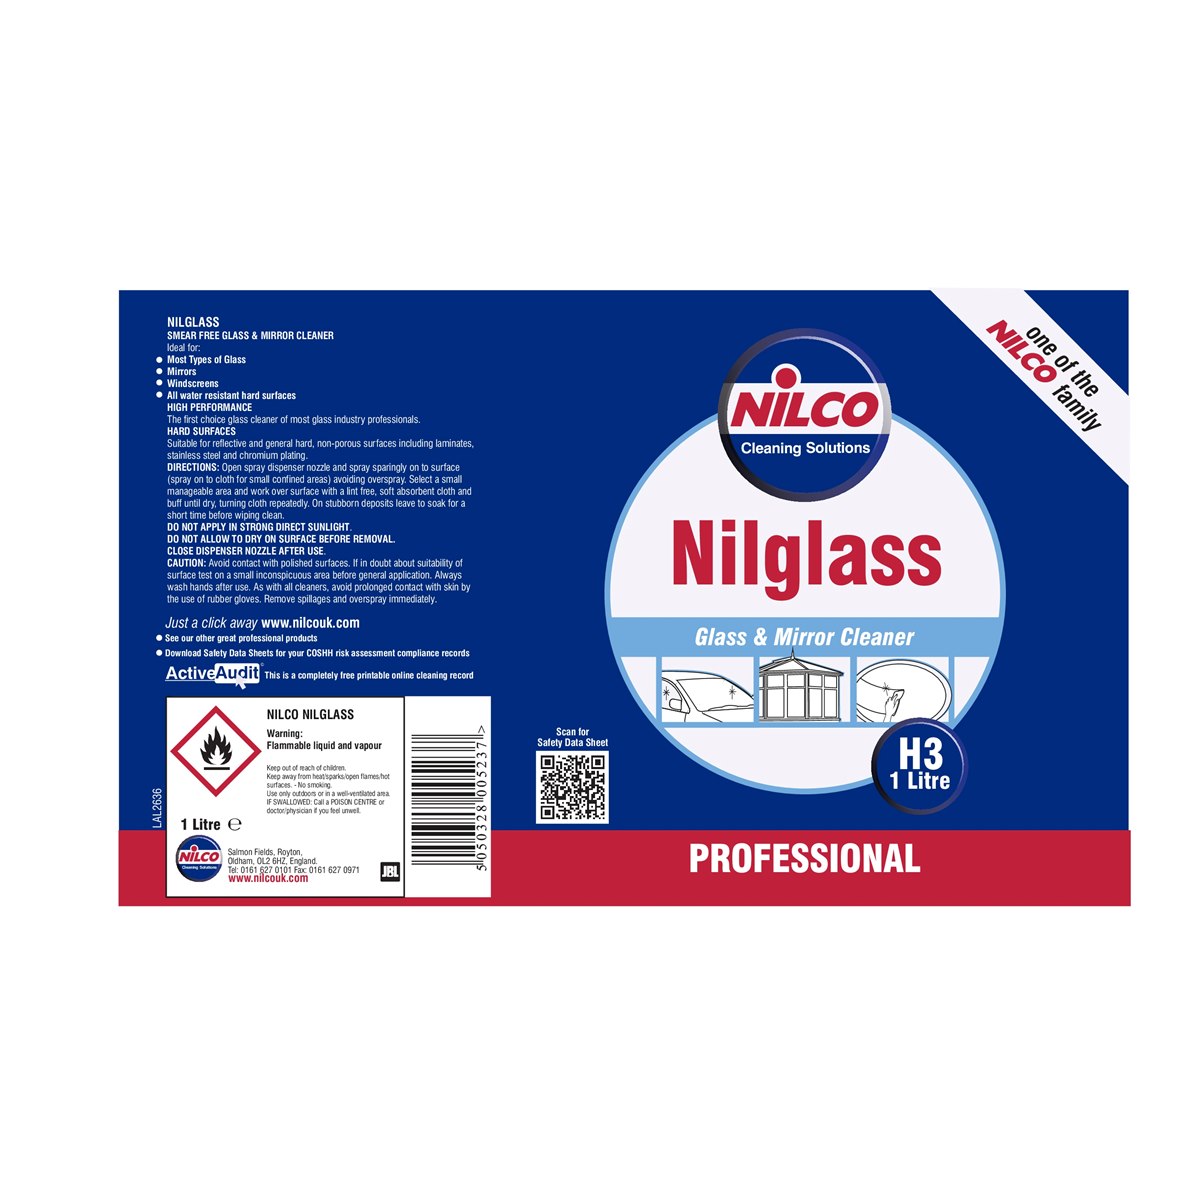 Nilglass H3 Glass and Mirror